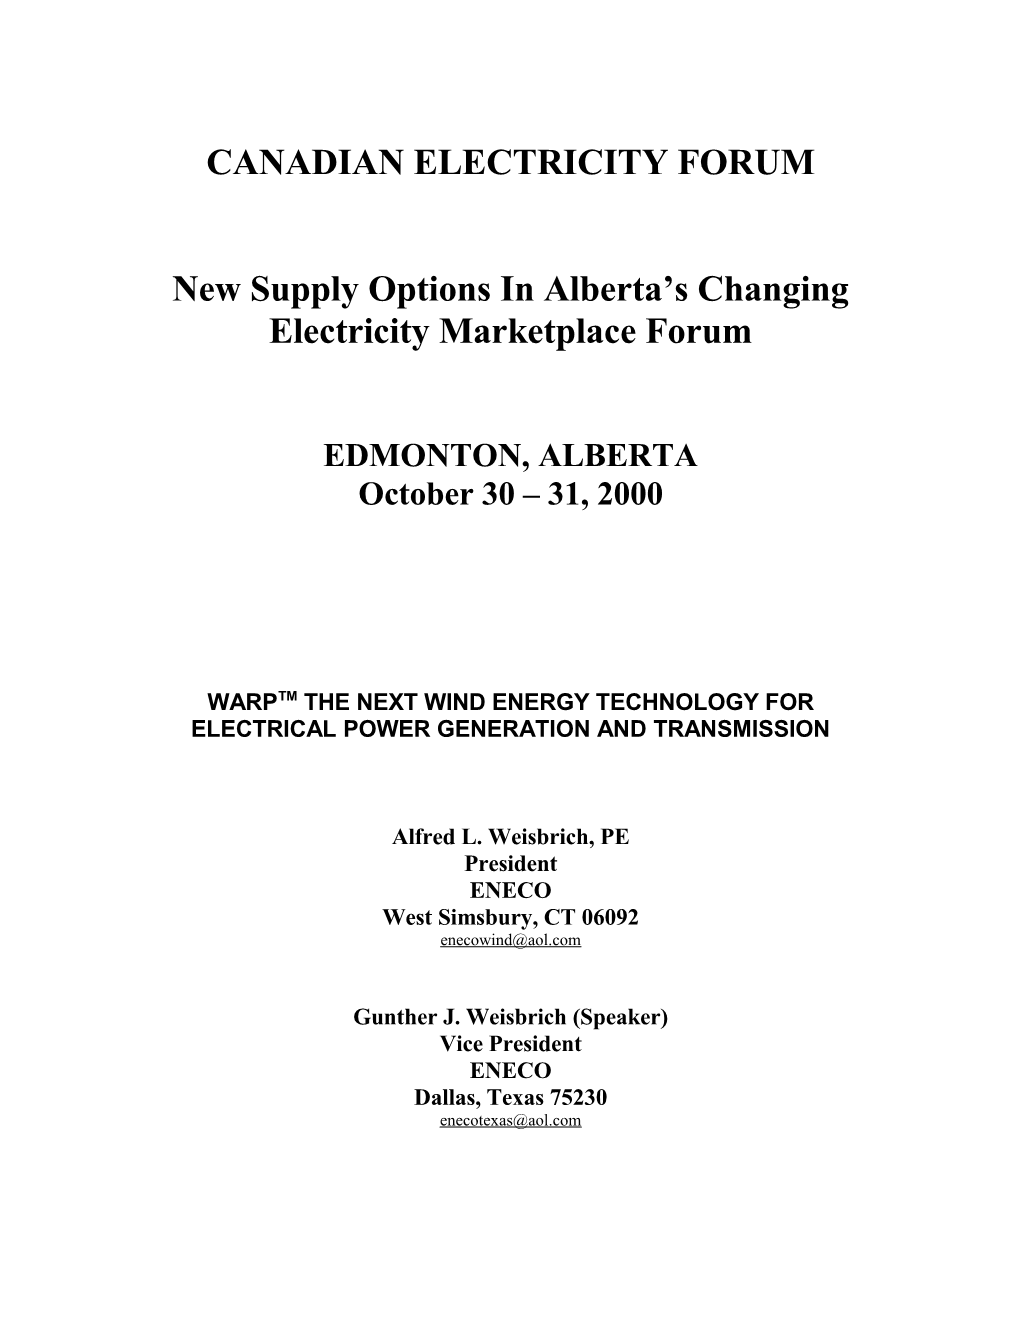 Canadian Electricity Forum